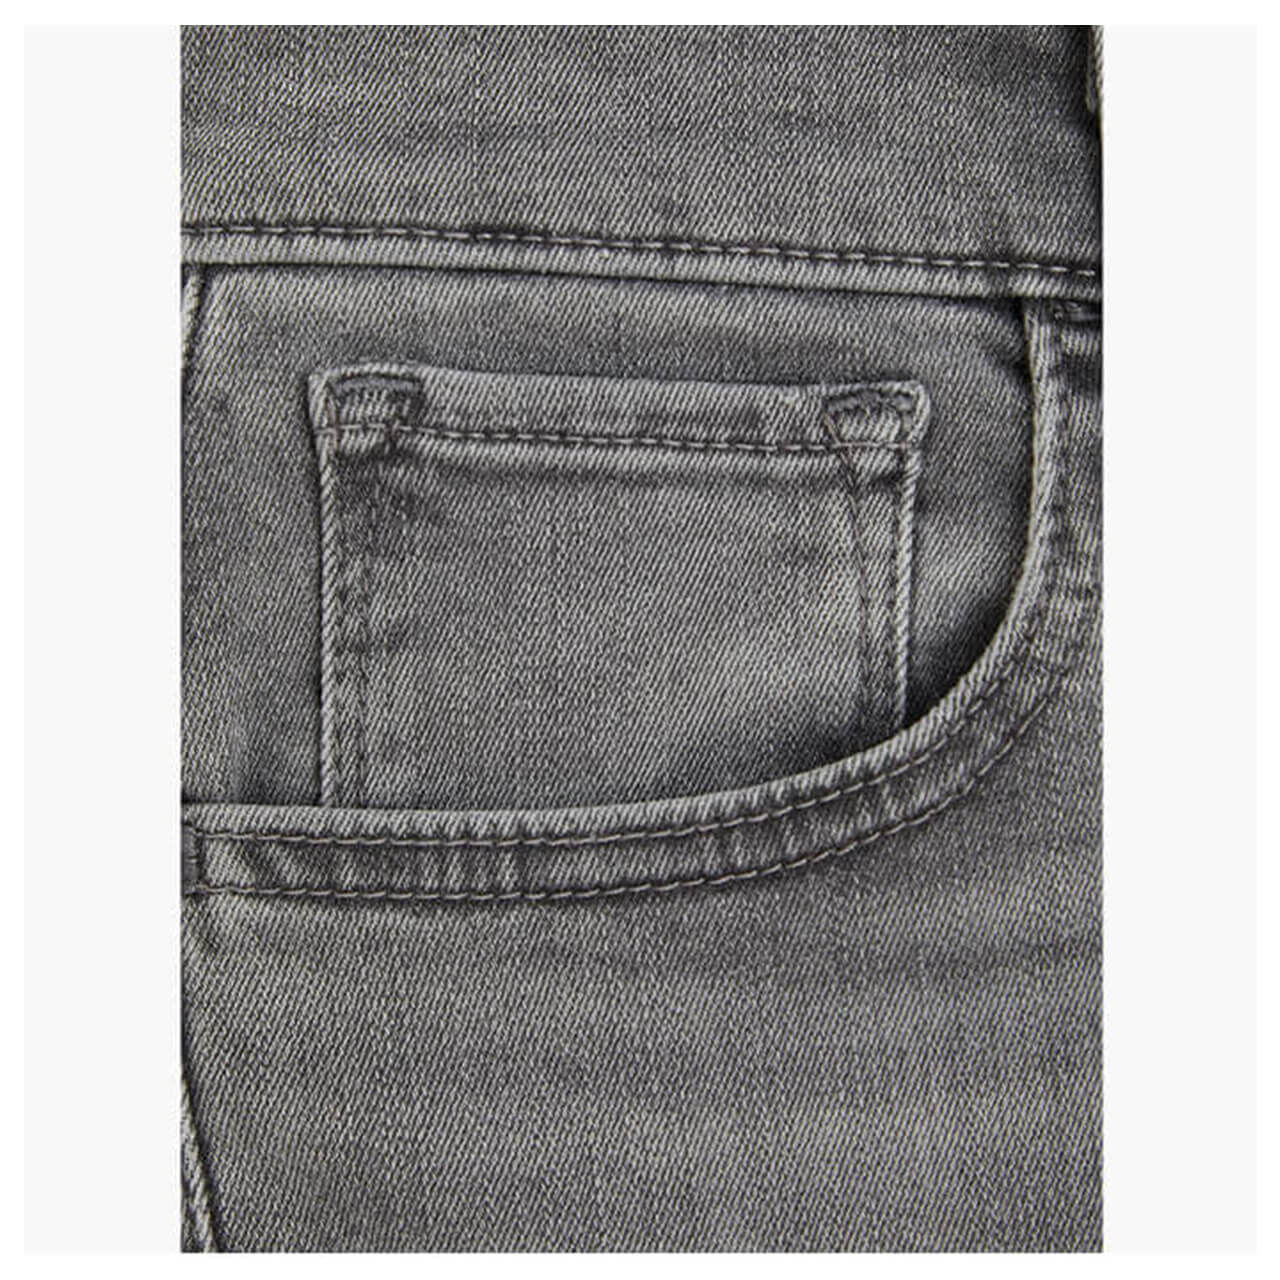 Levi's® 720 Damen Jeans Super Skinny light grey